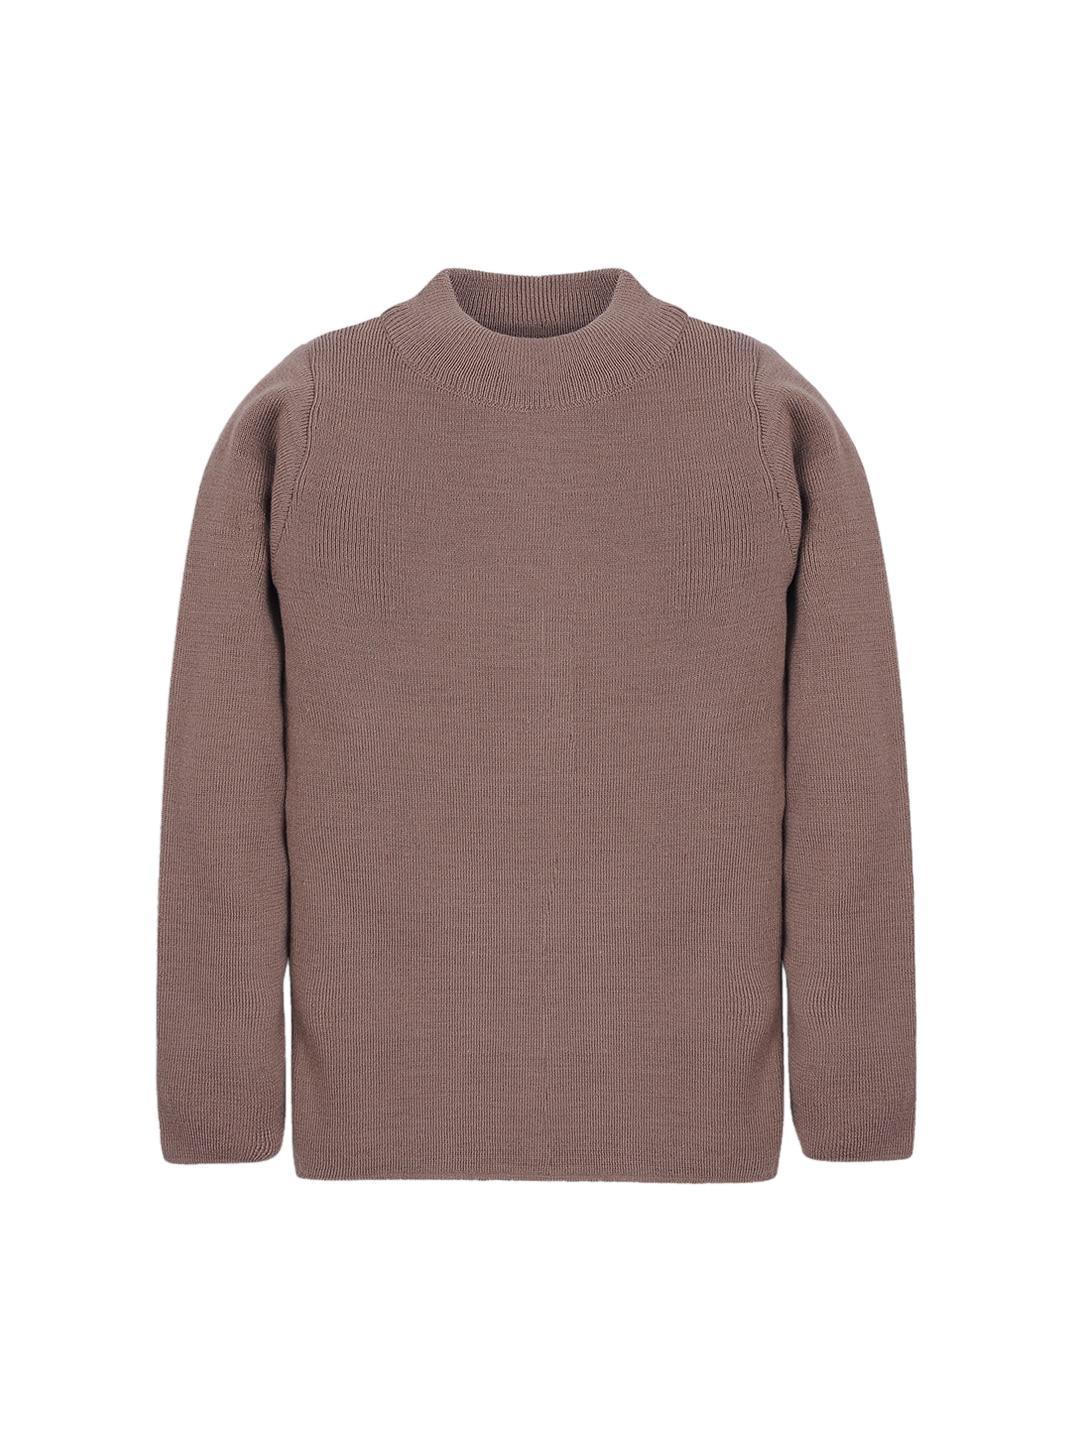 rvk unisex camel brown solid sweater